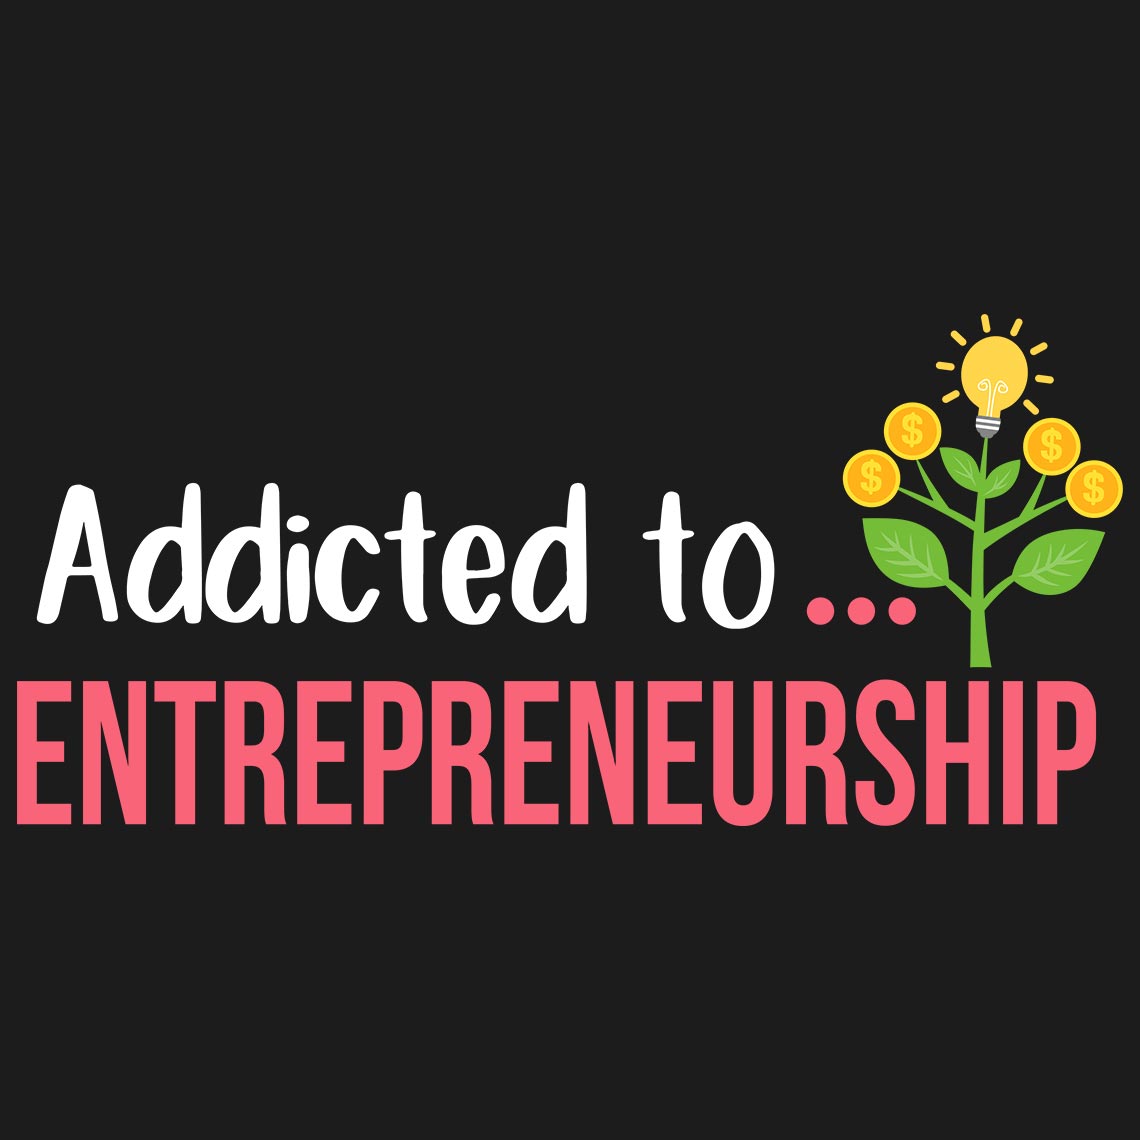 Addicted To Entrepreneurship - Soul & Peace